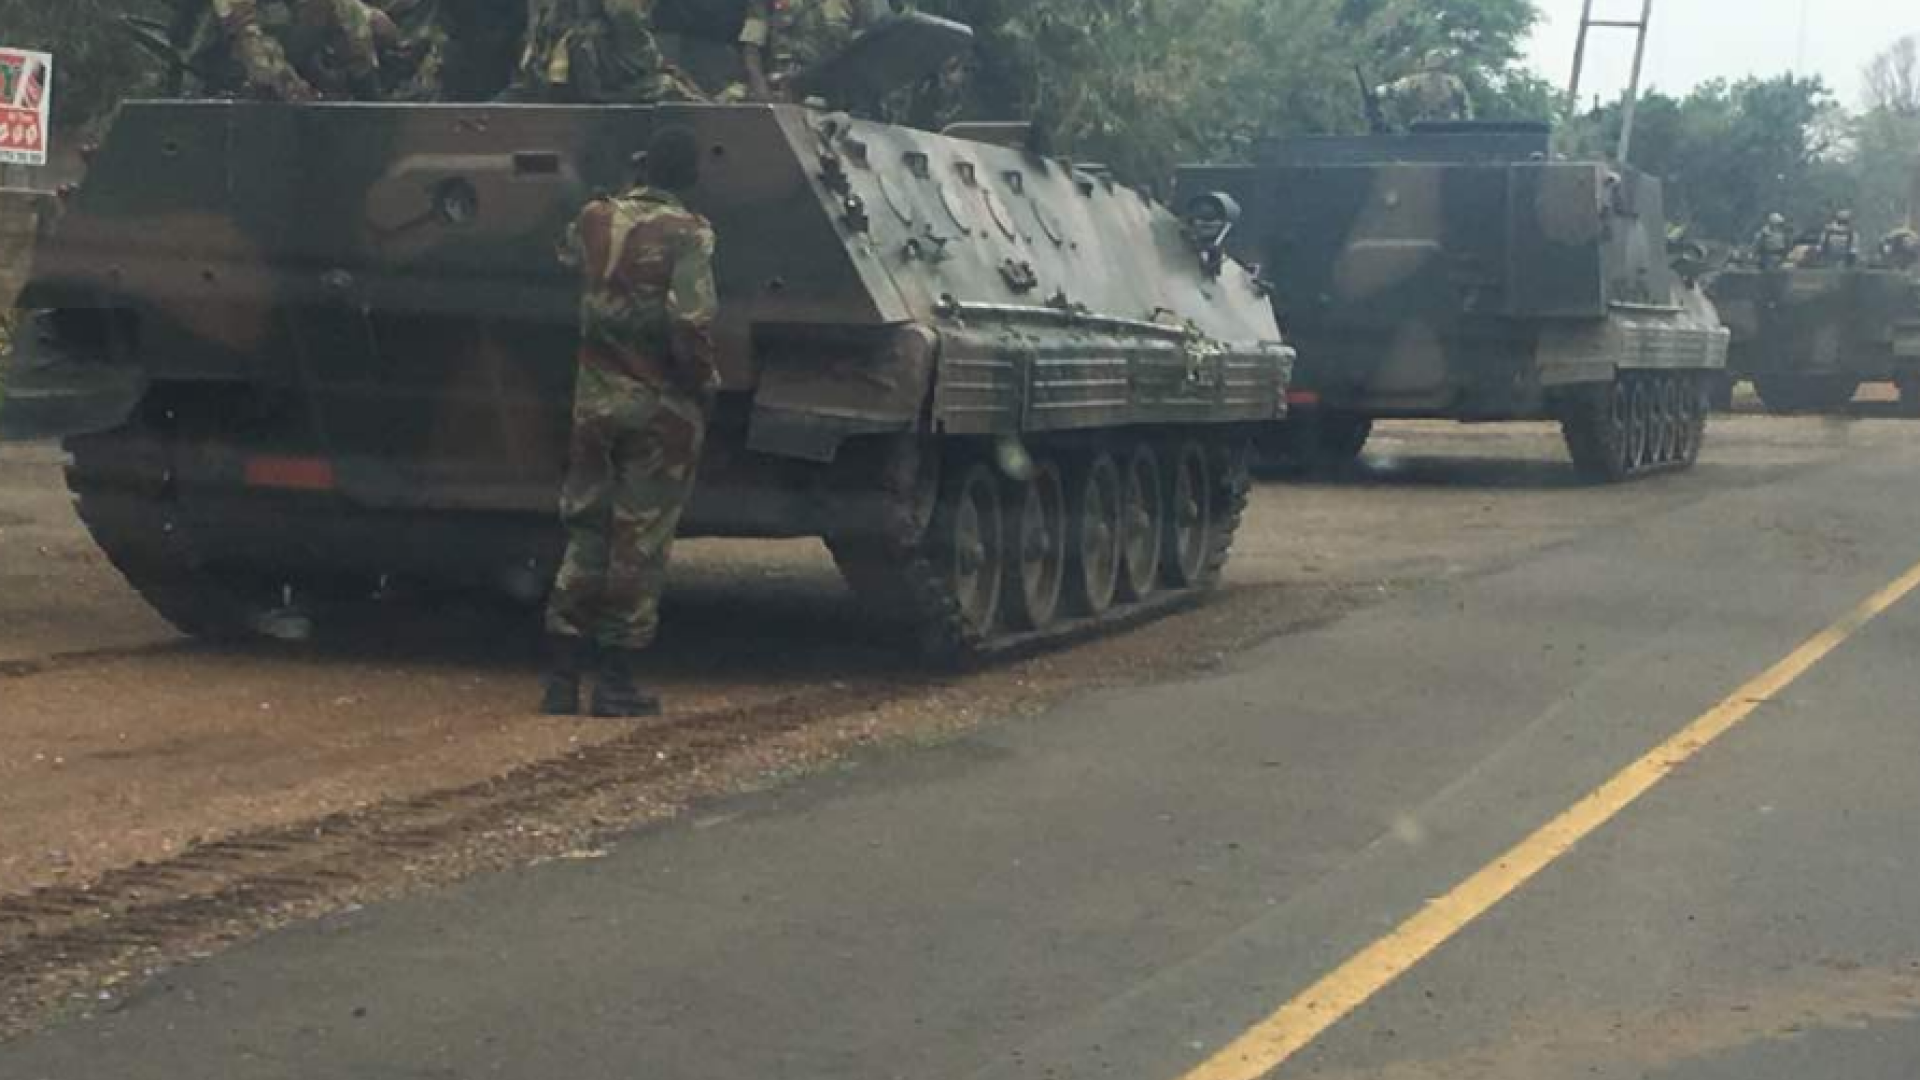 Tancuri în Zimbabwe